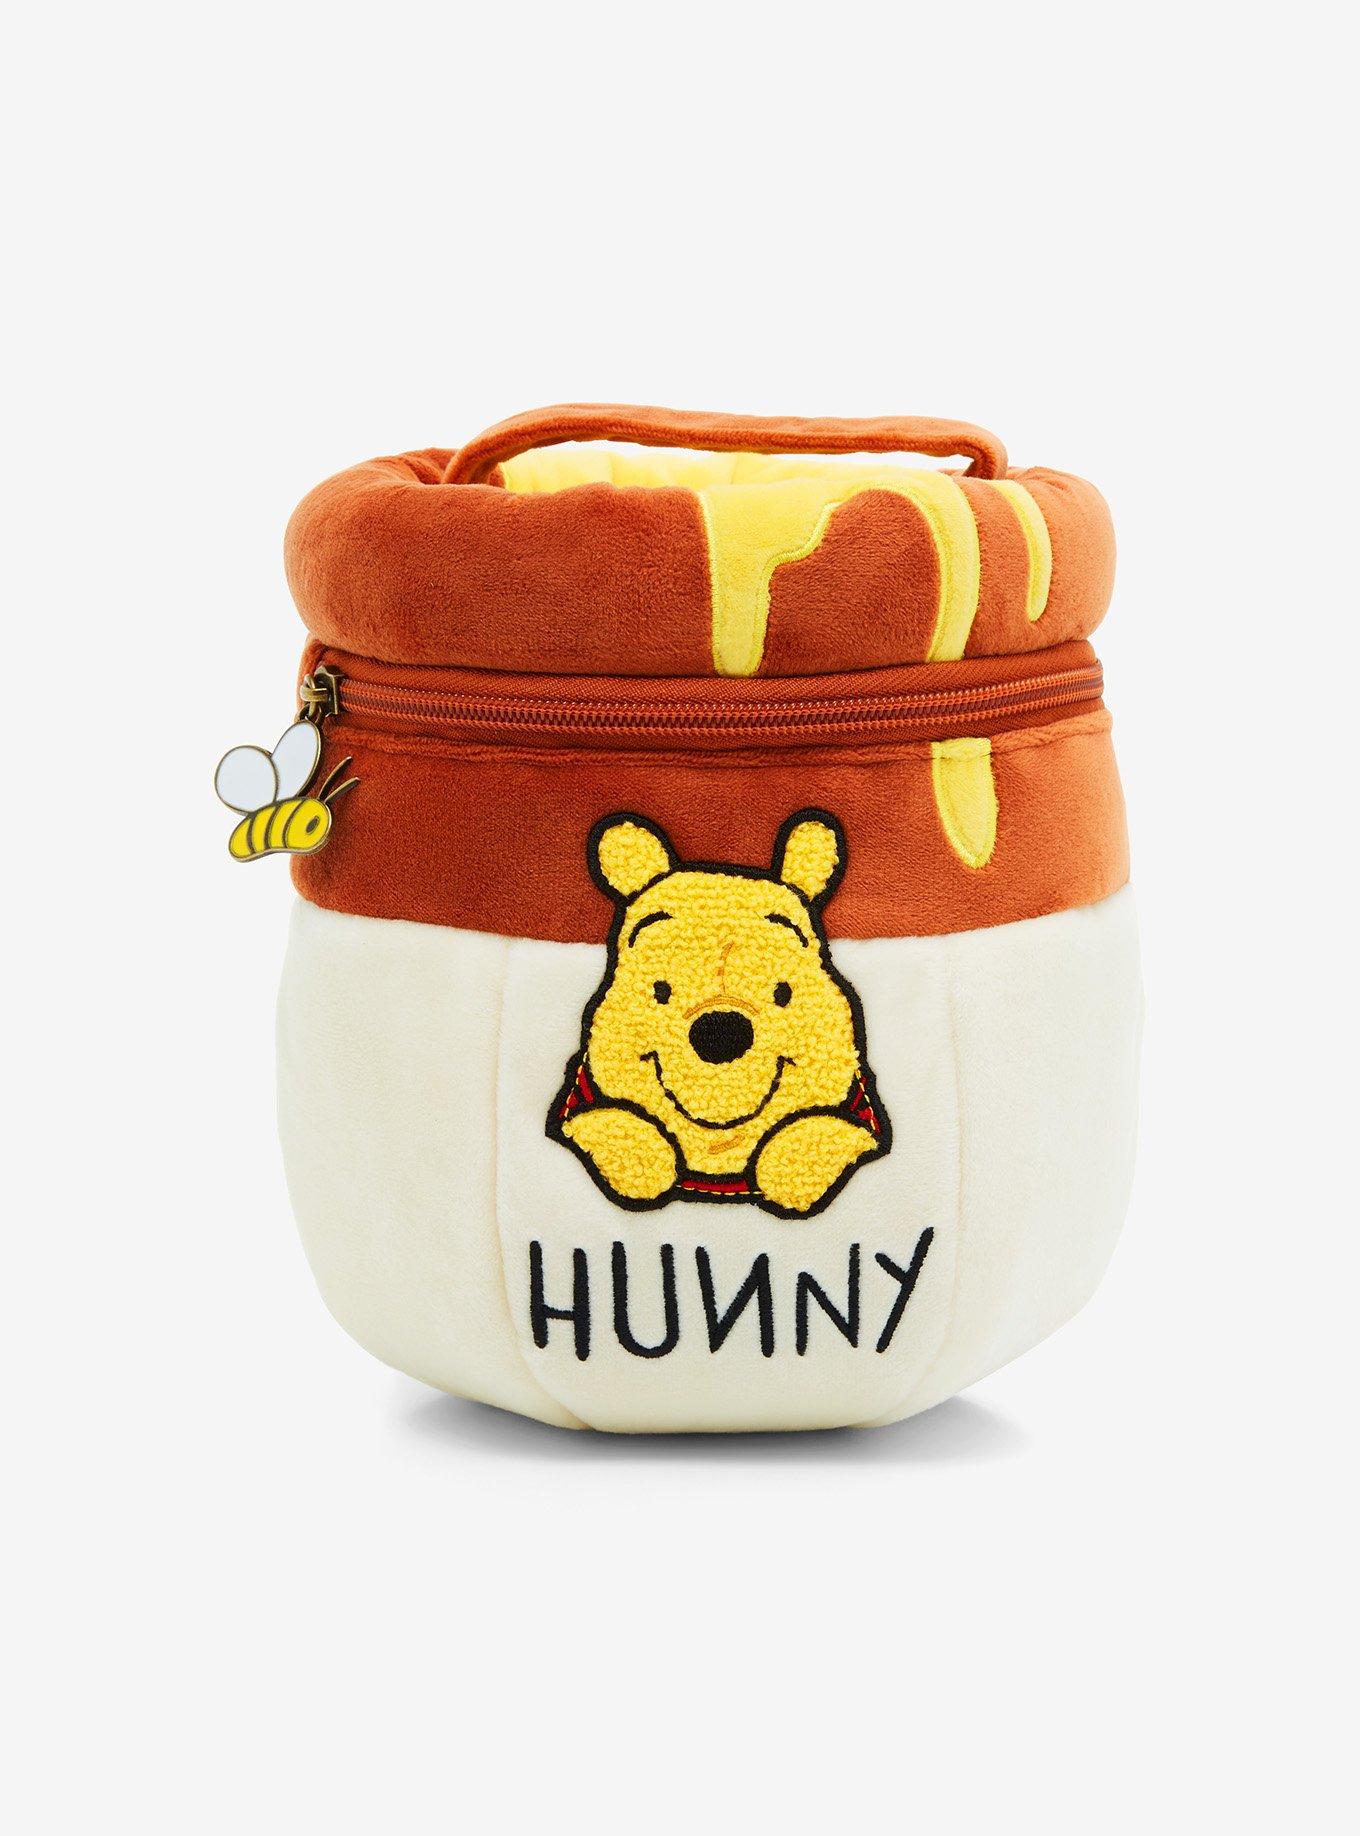 winnie the pooh honey pot picture